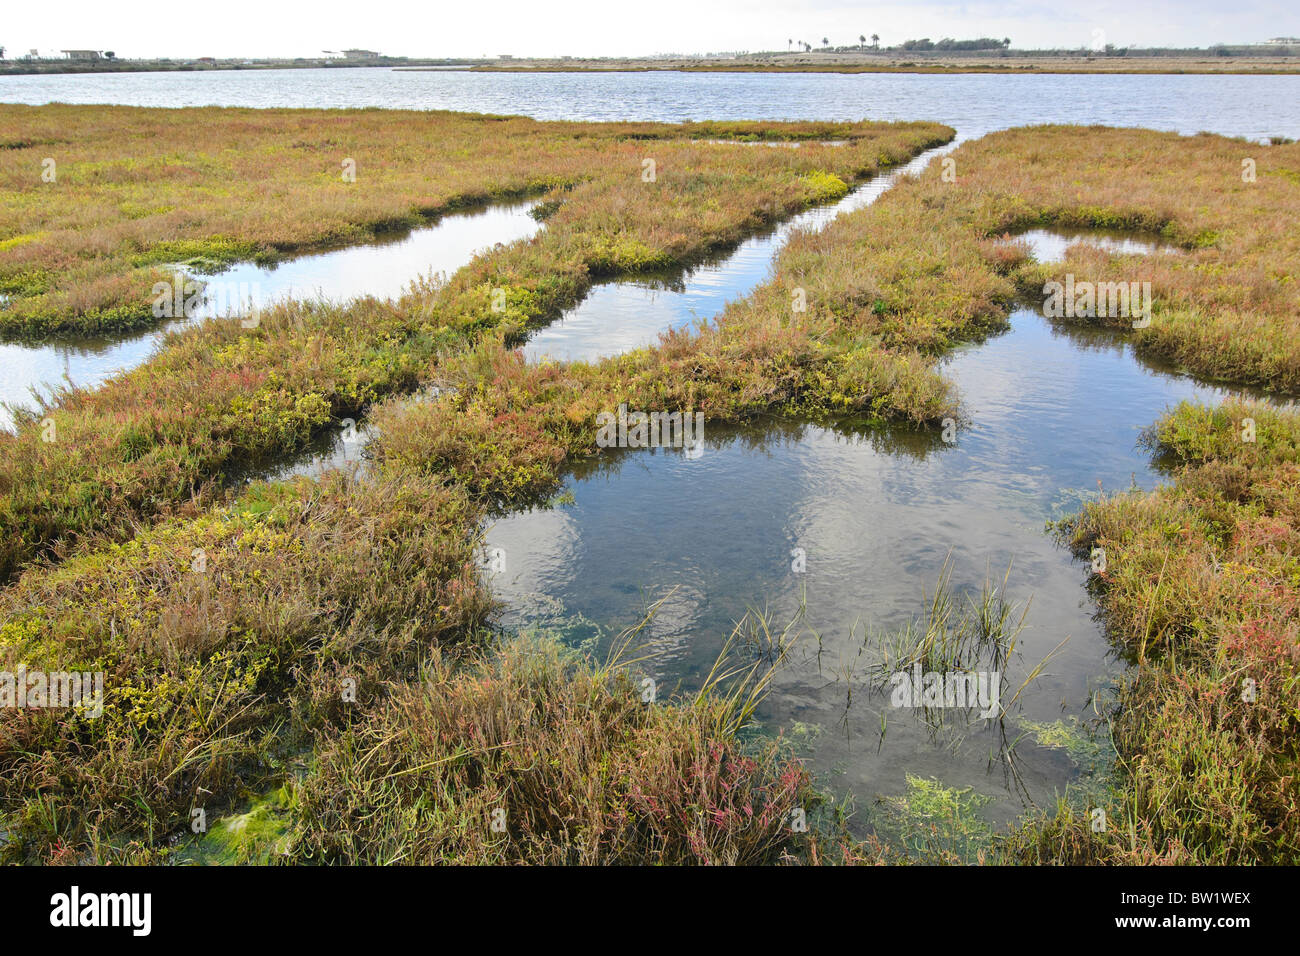 Bolsa Chica Ecological Reserve Wetlands. Stock Photo